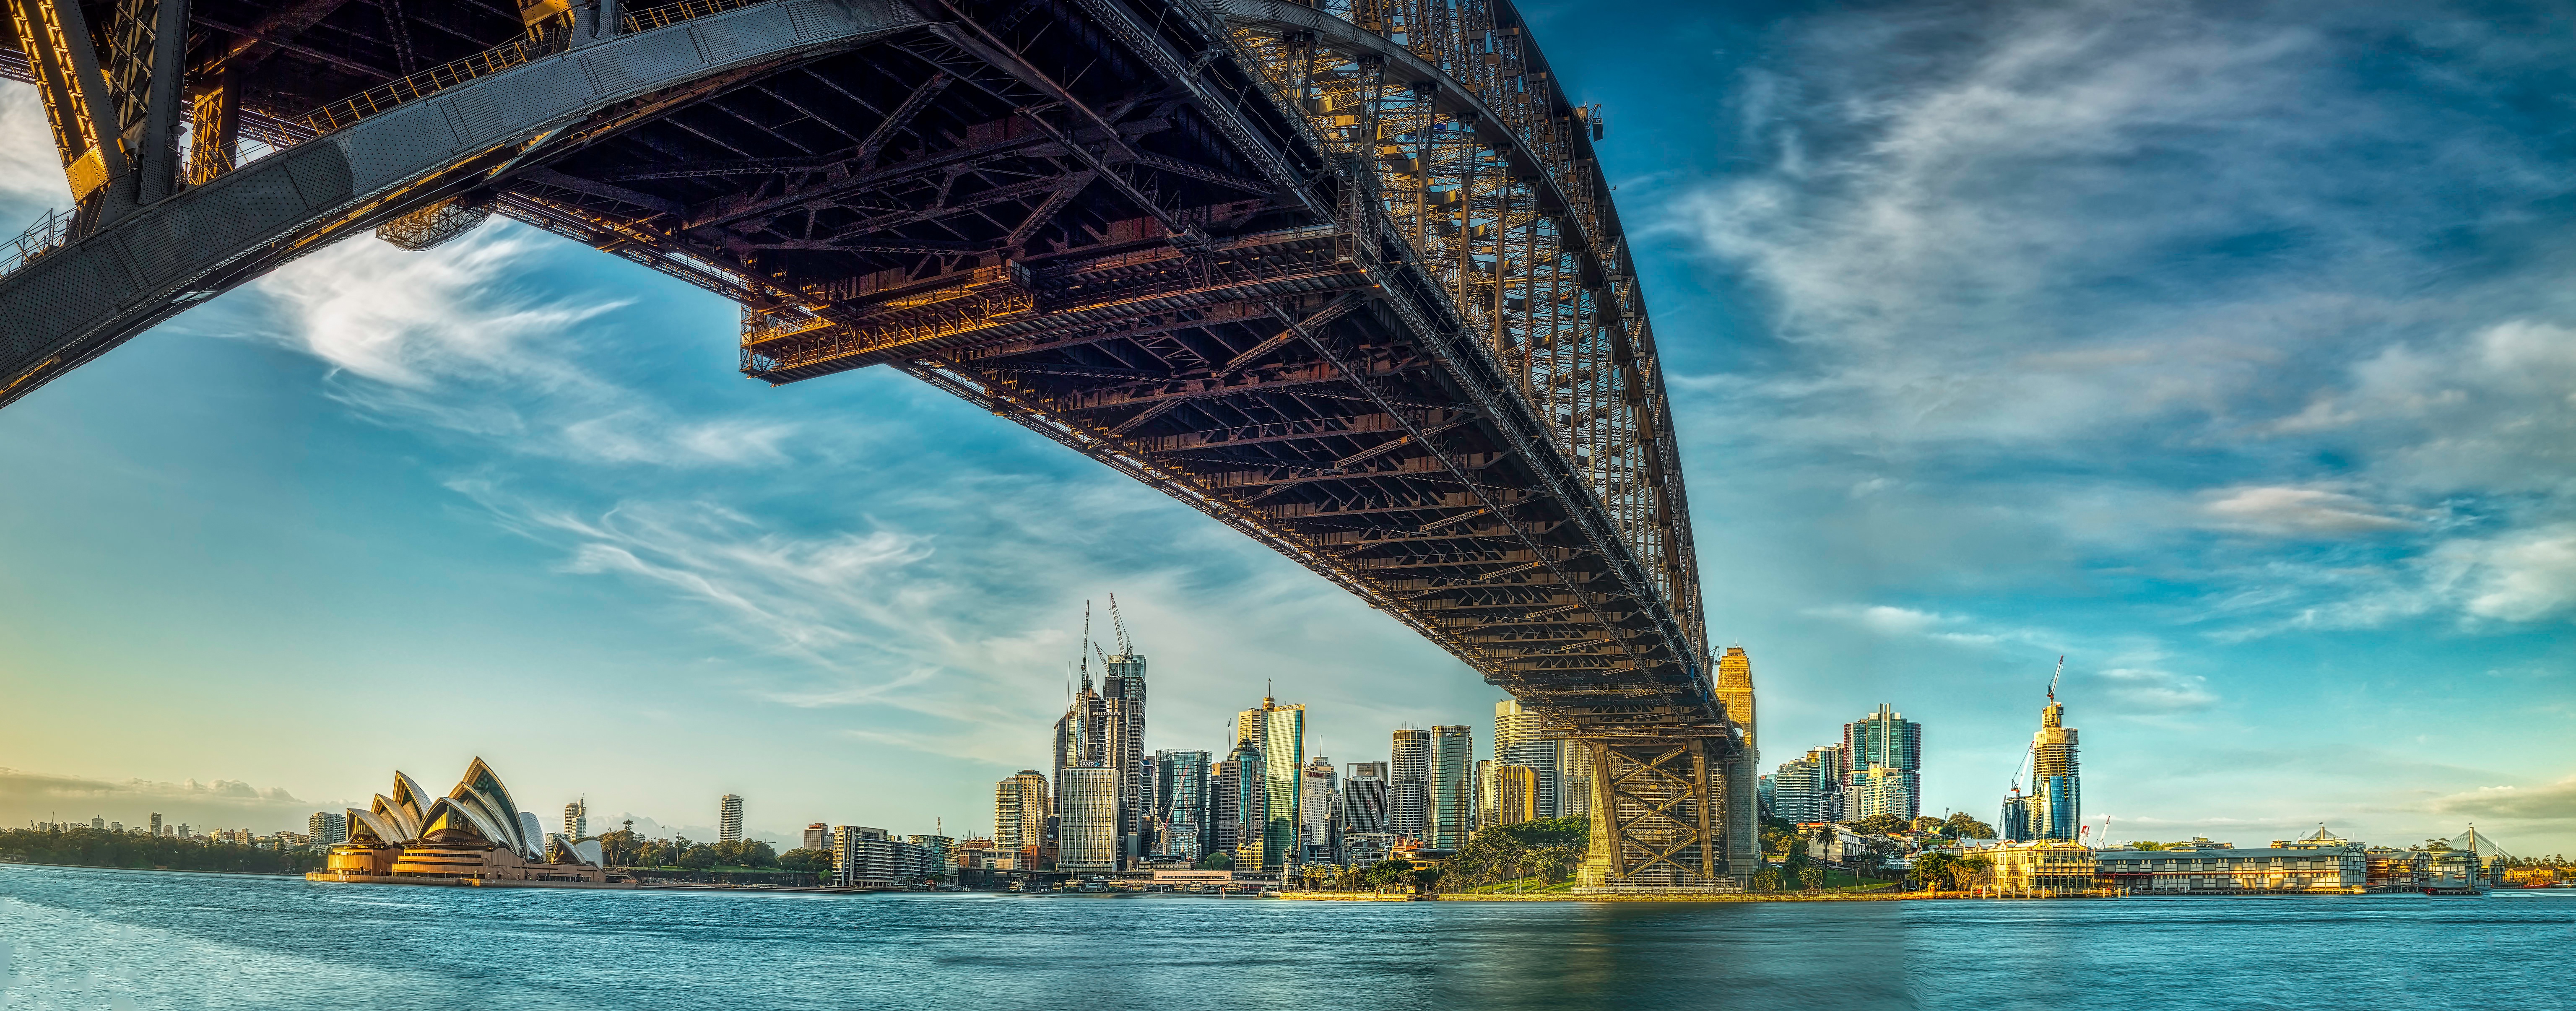 Sydney Harbour Bridge 4k Ultra HD Wallpaper